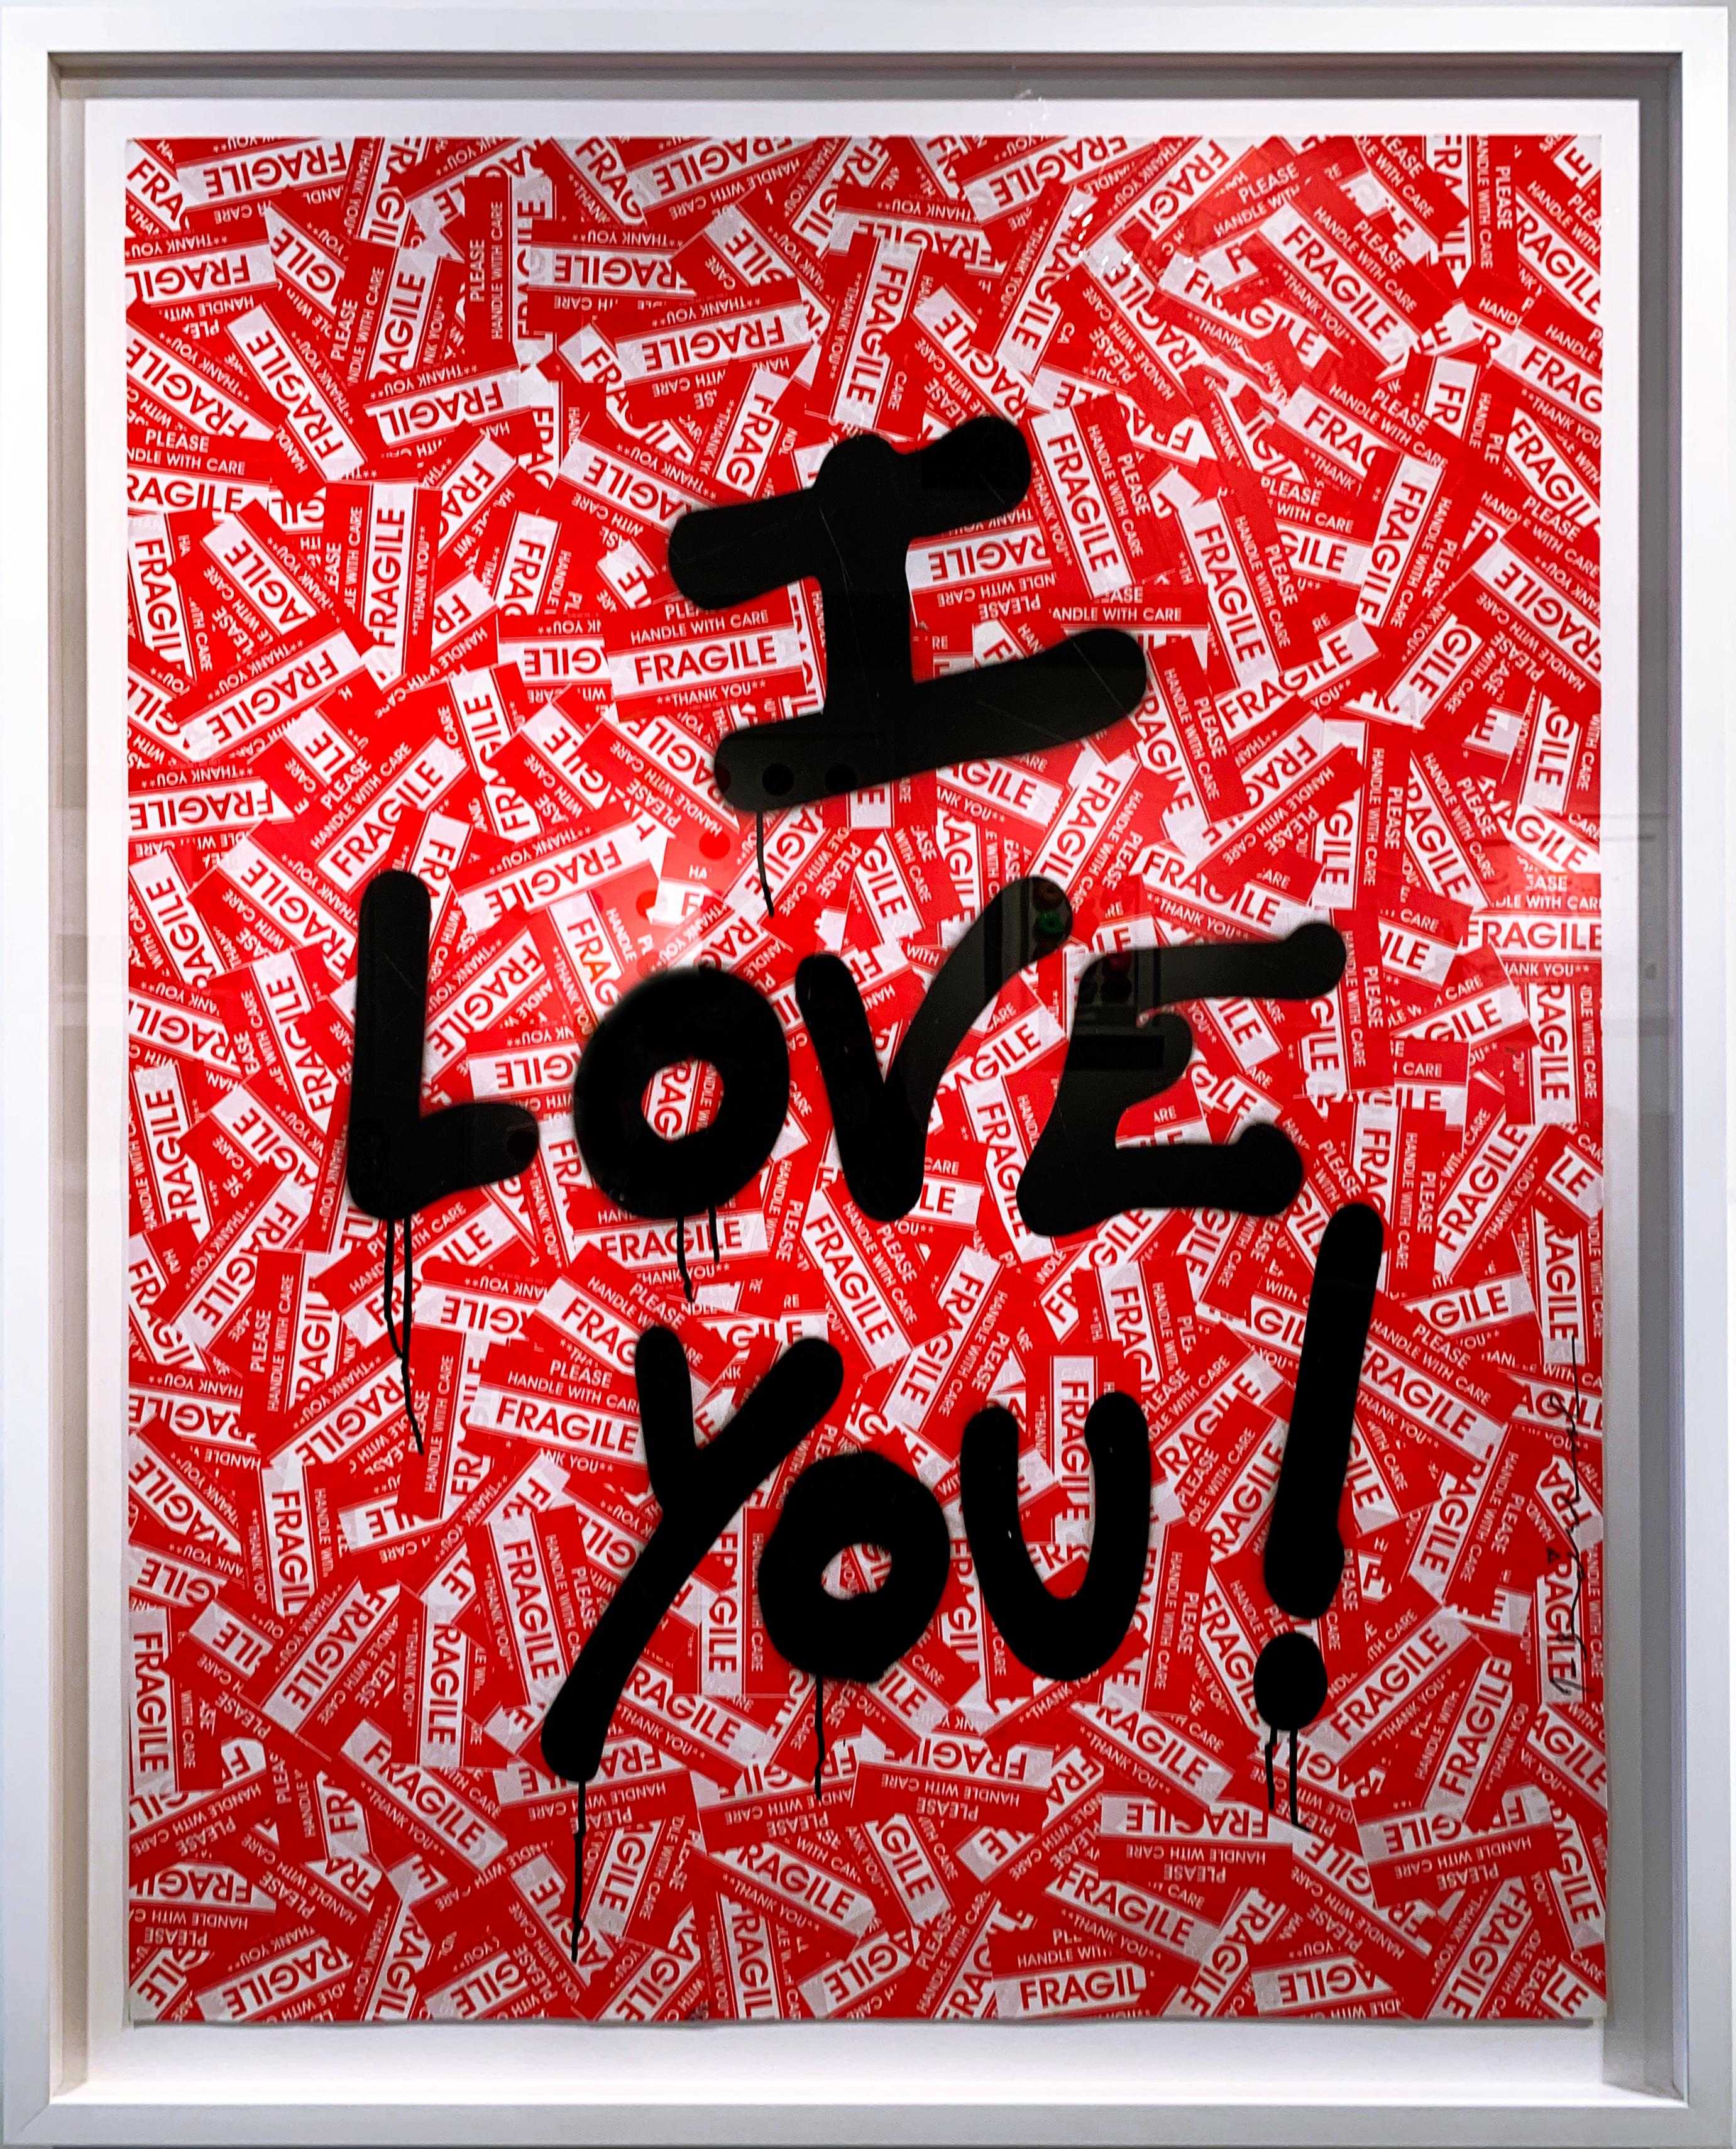 I Love You! - Mixed Media Art by Mr. Brainwash